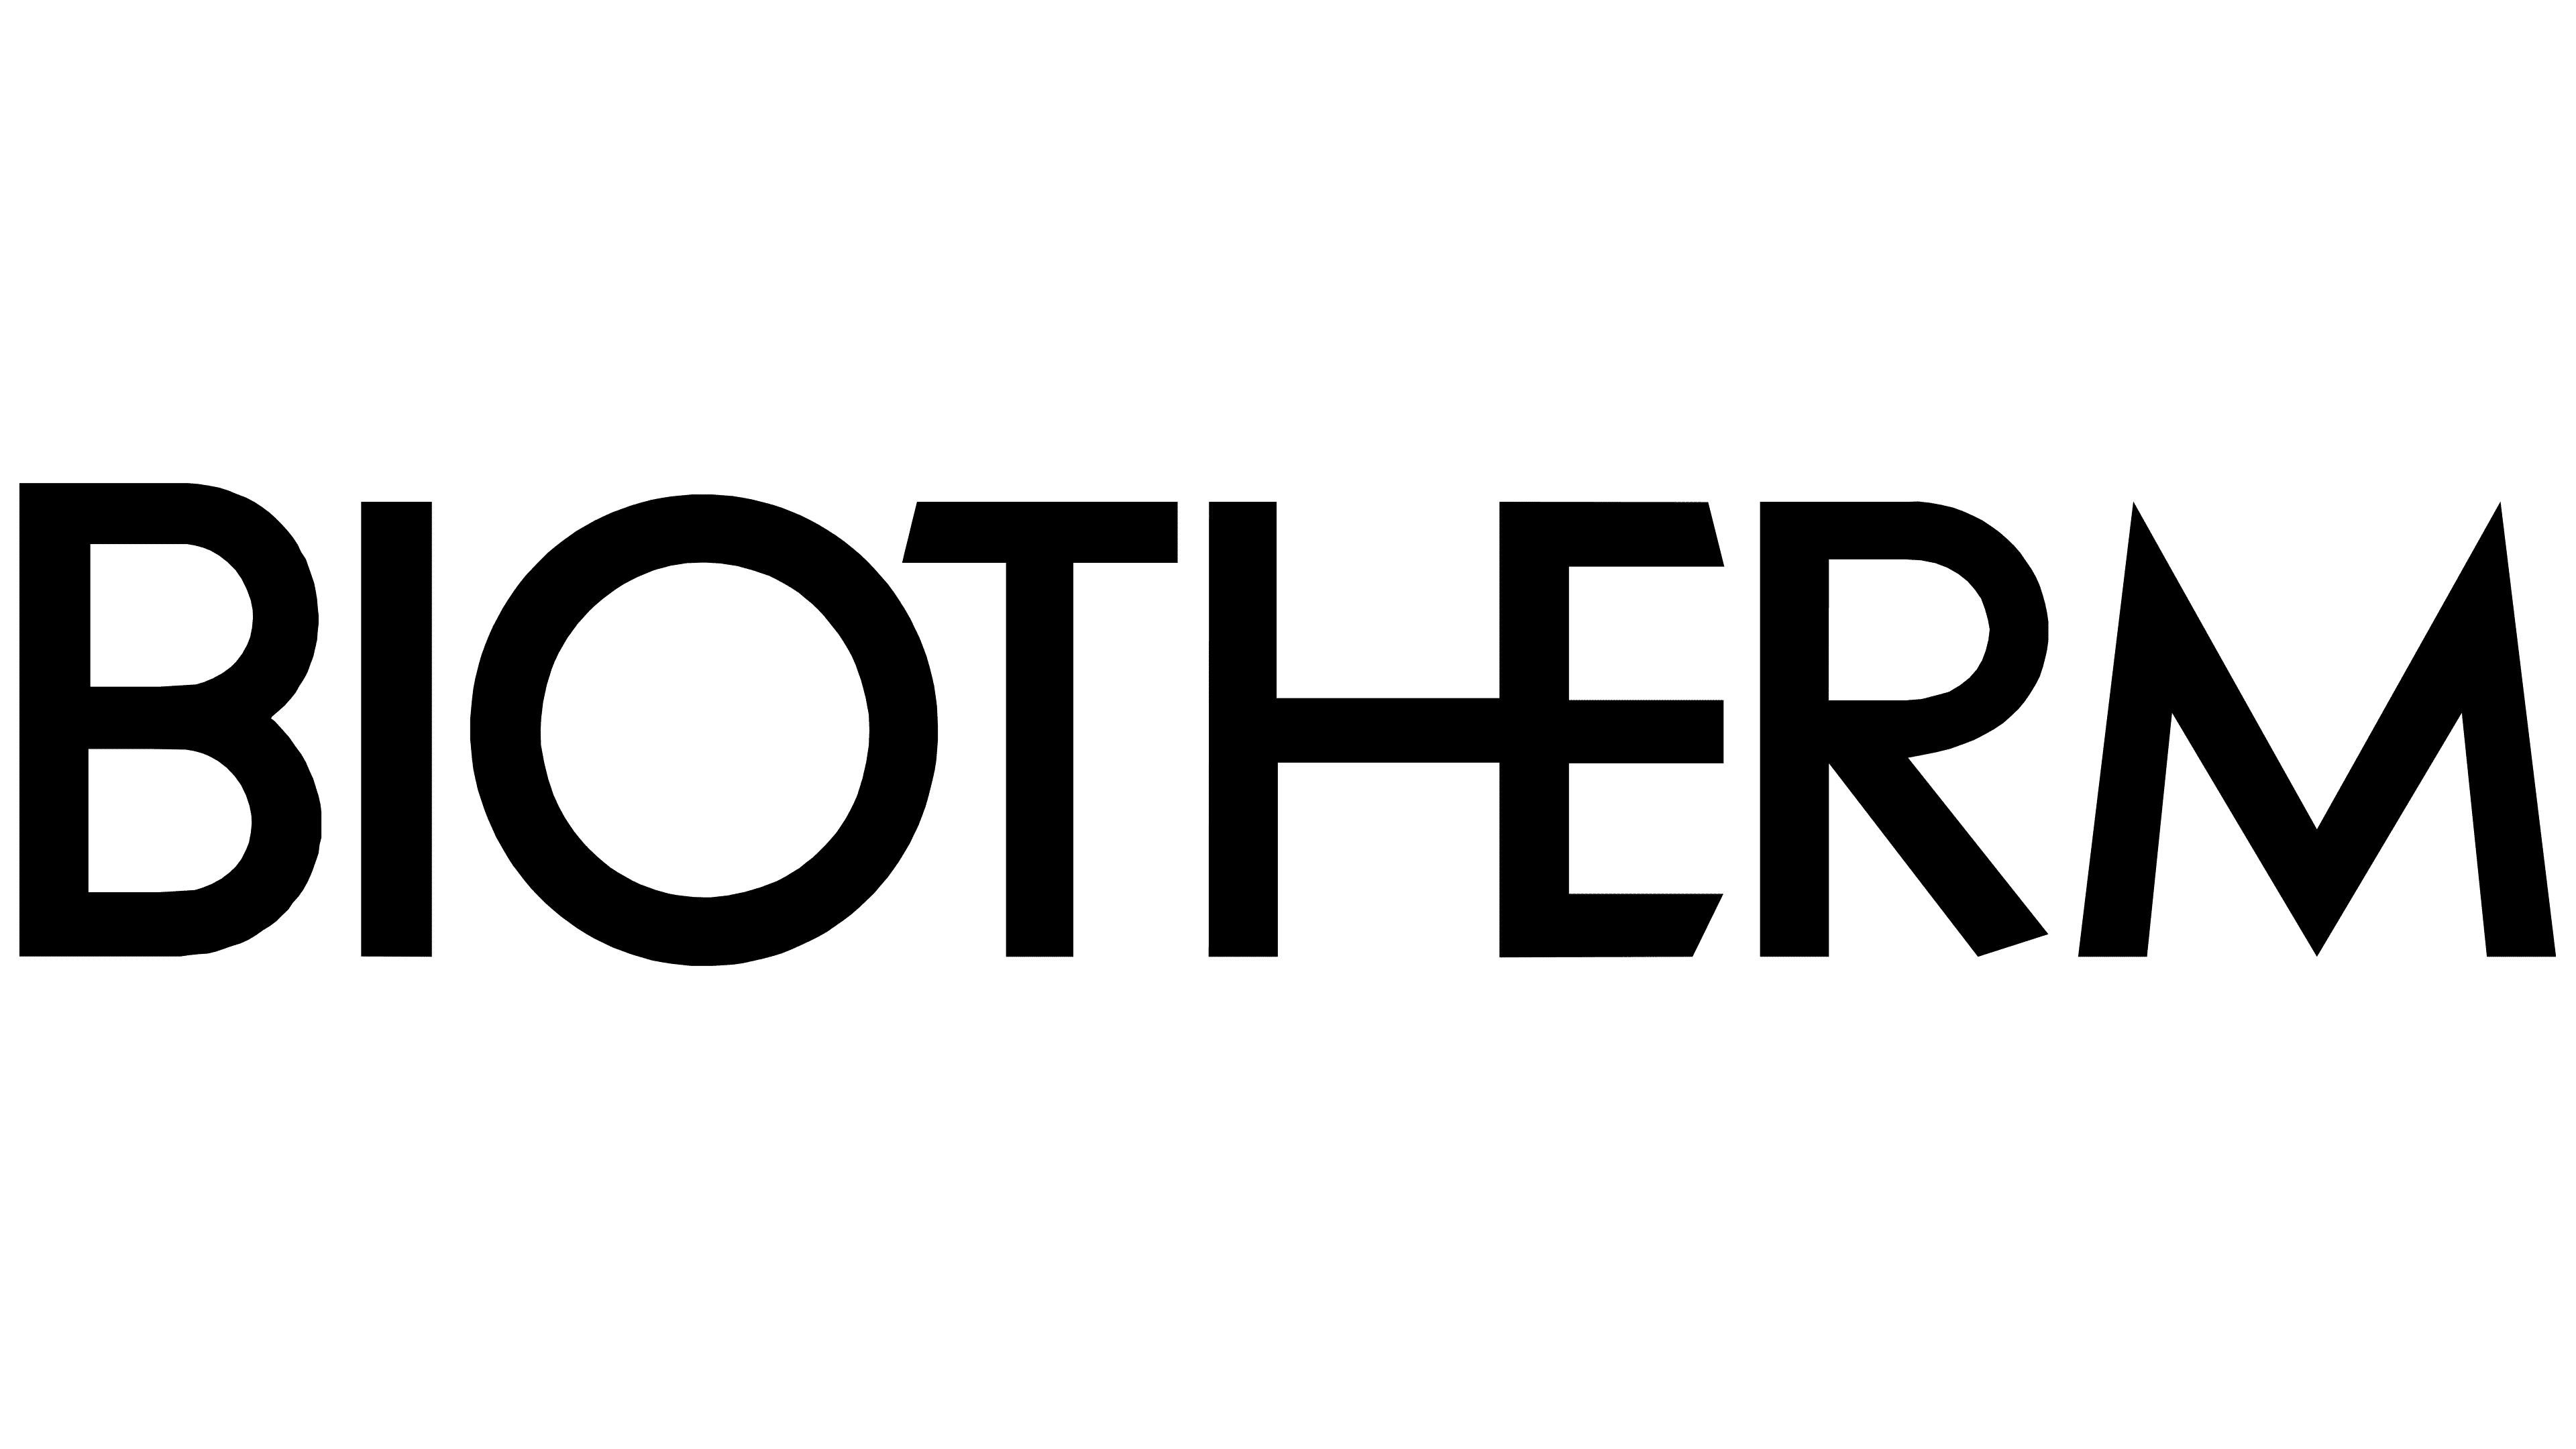 Biotherm-Logo